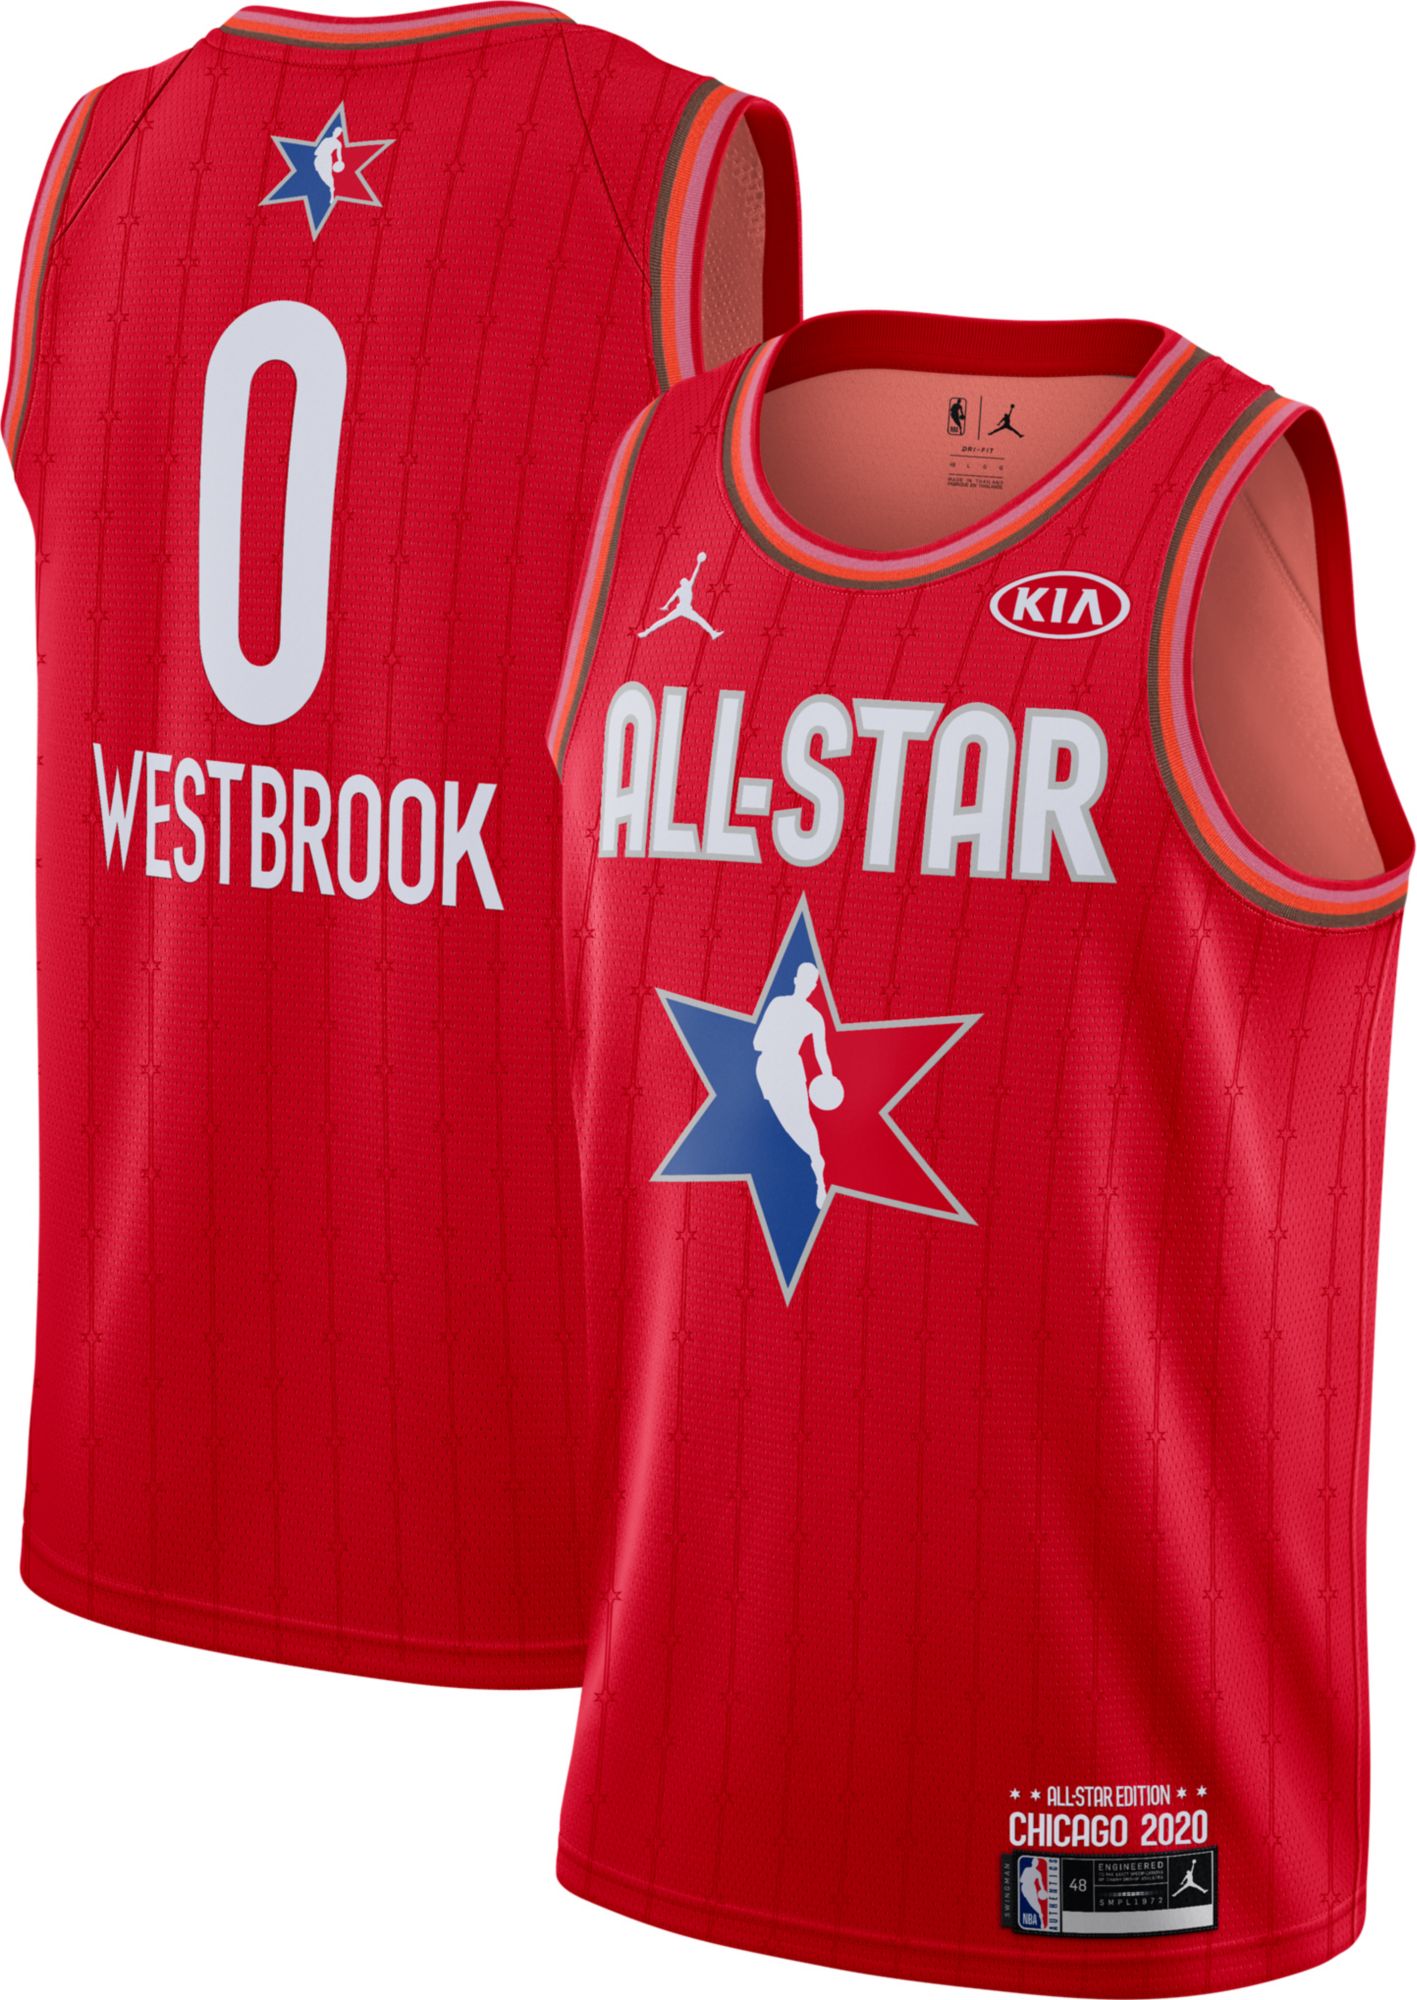 all star westbrook jersey